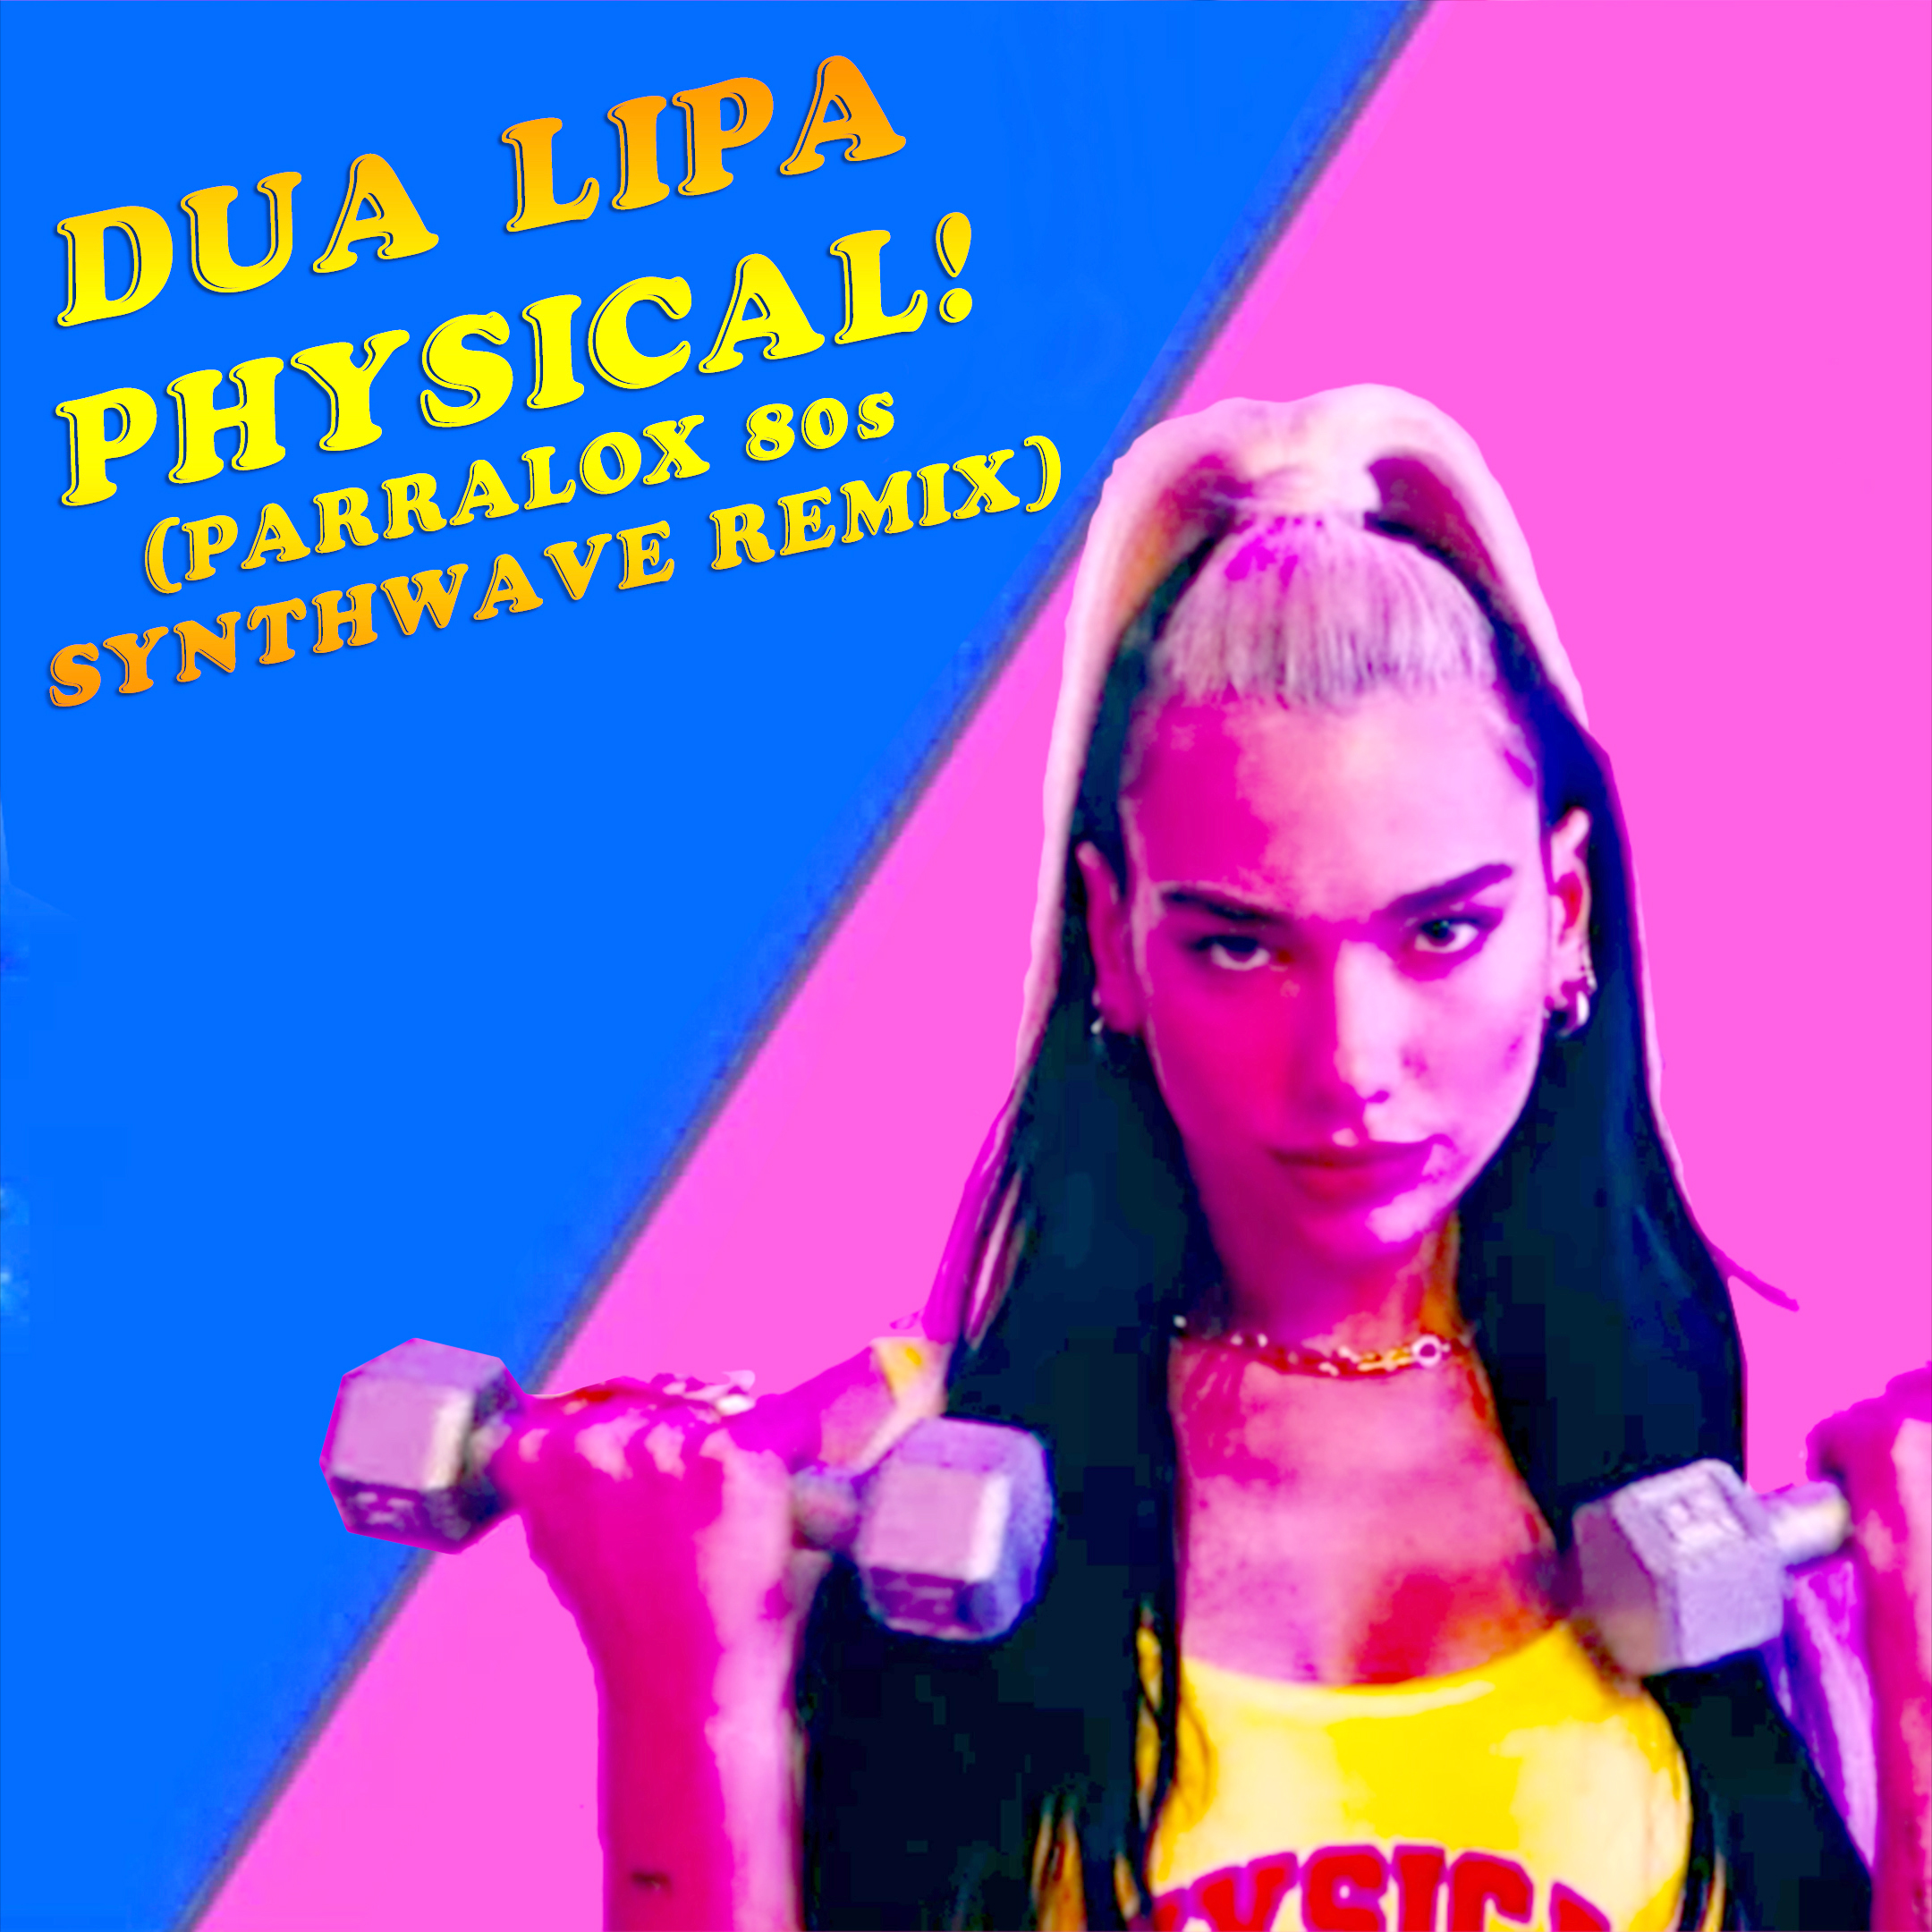 Show 344 – Dua Lipa – Physical (Parralox Synthwave 80s Remix)